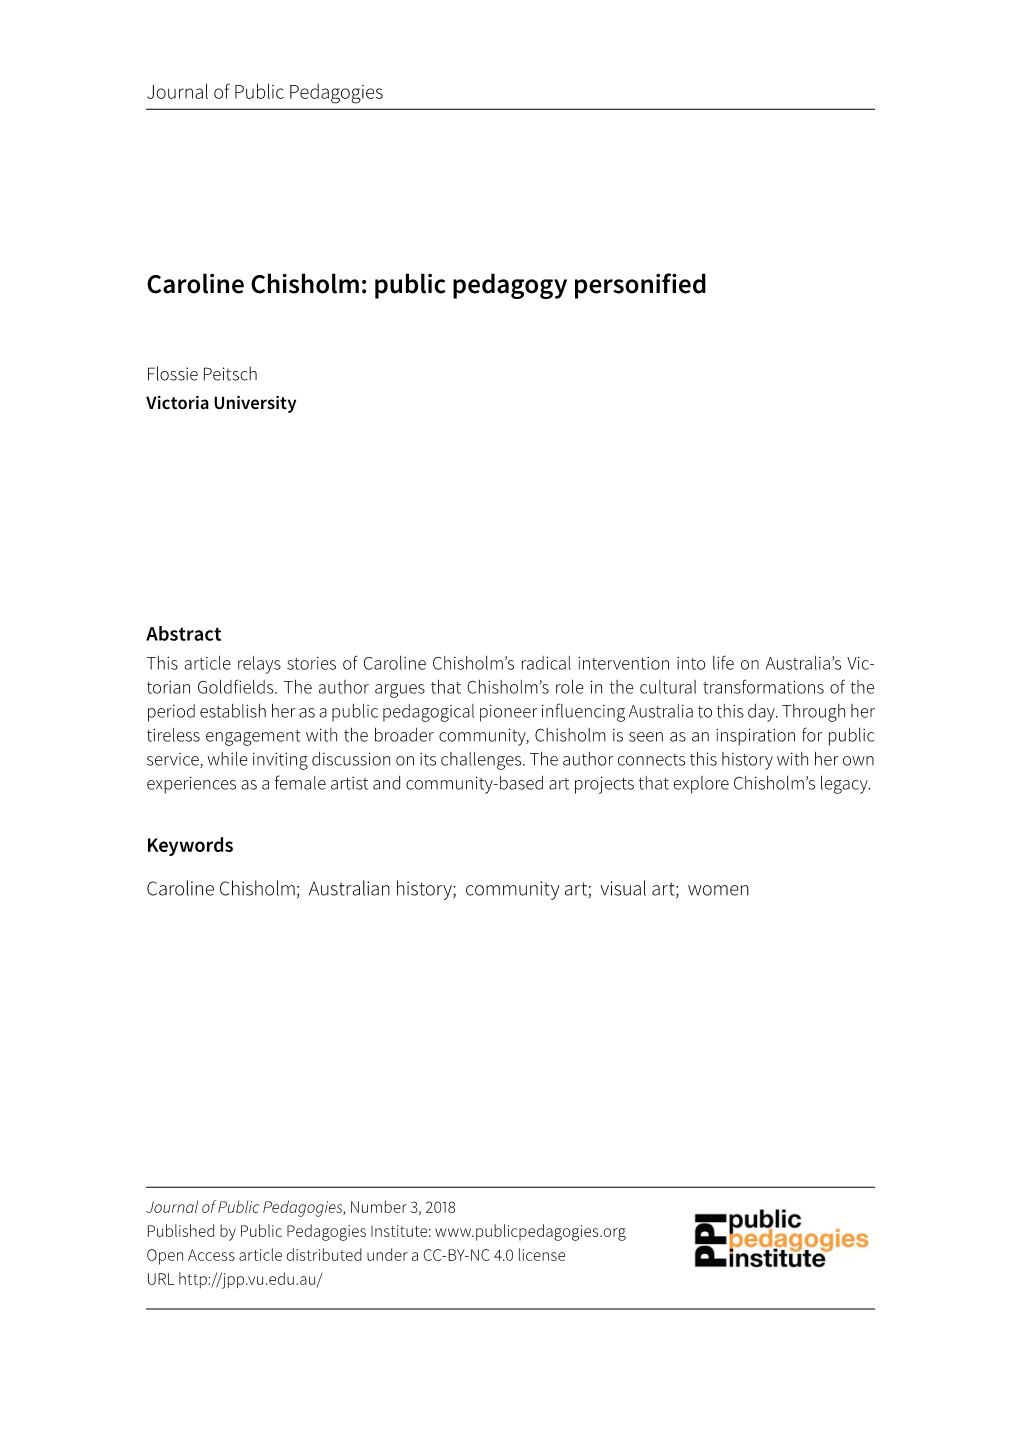 Caroline Chisholm: Public Pedagogy Personified